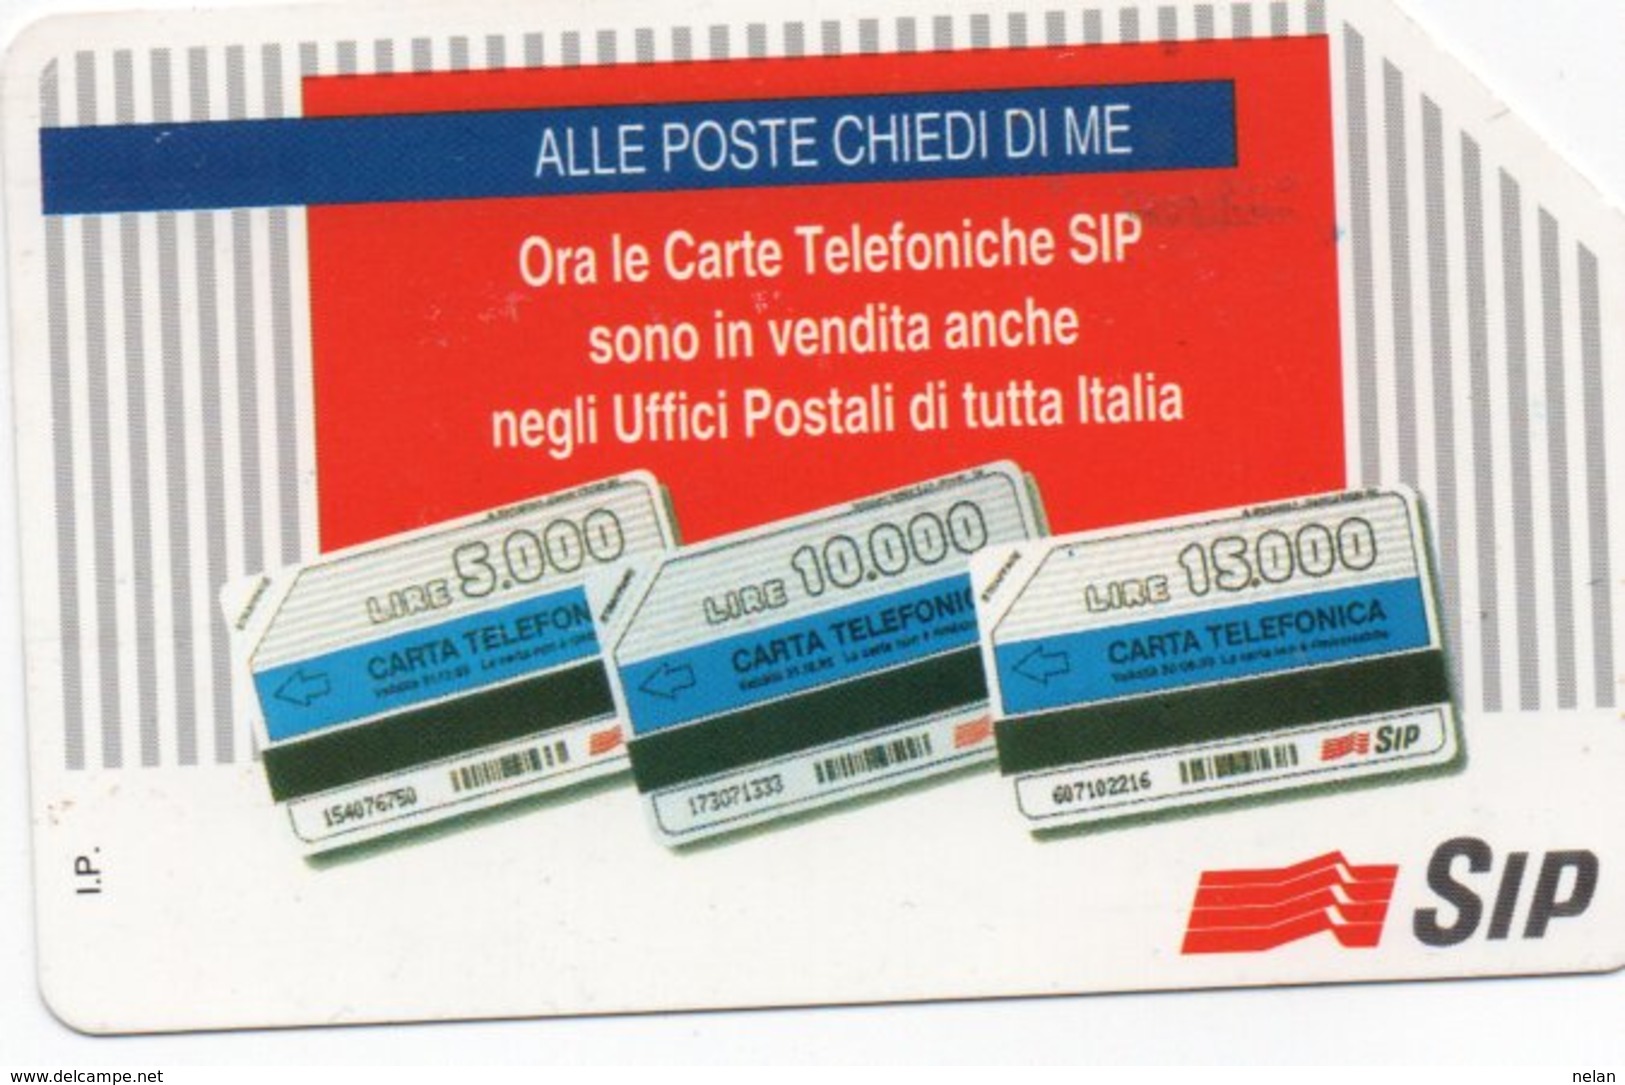 PHONE CARD-ITALIA-CARTA TELEFONICA -SIP-CHIEDI DI ME - Pubbliche Pubblicitarie